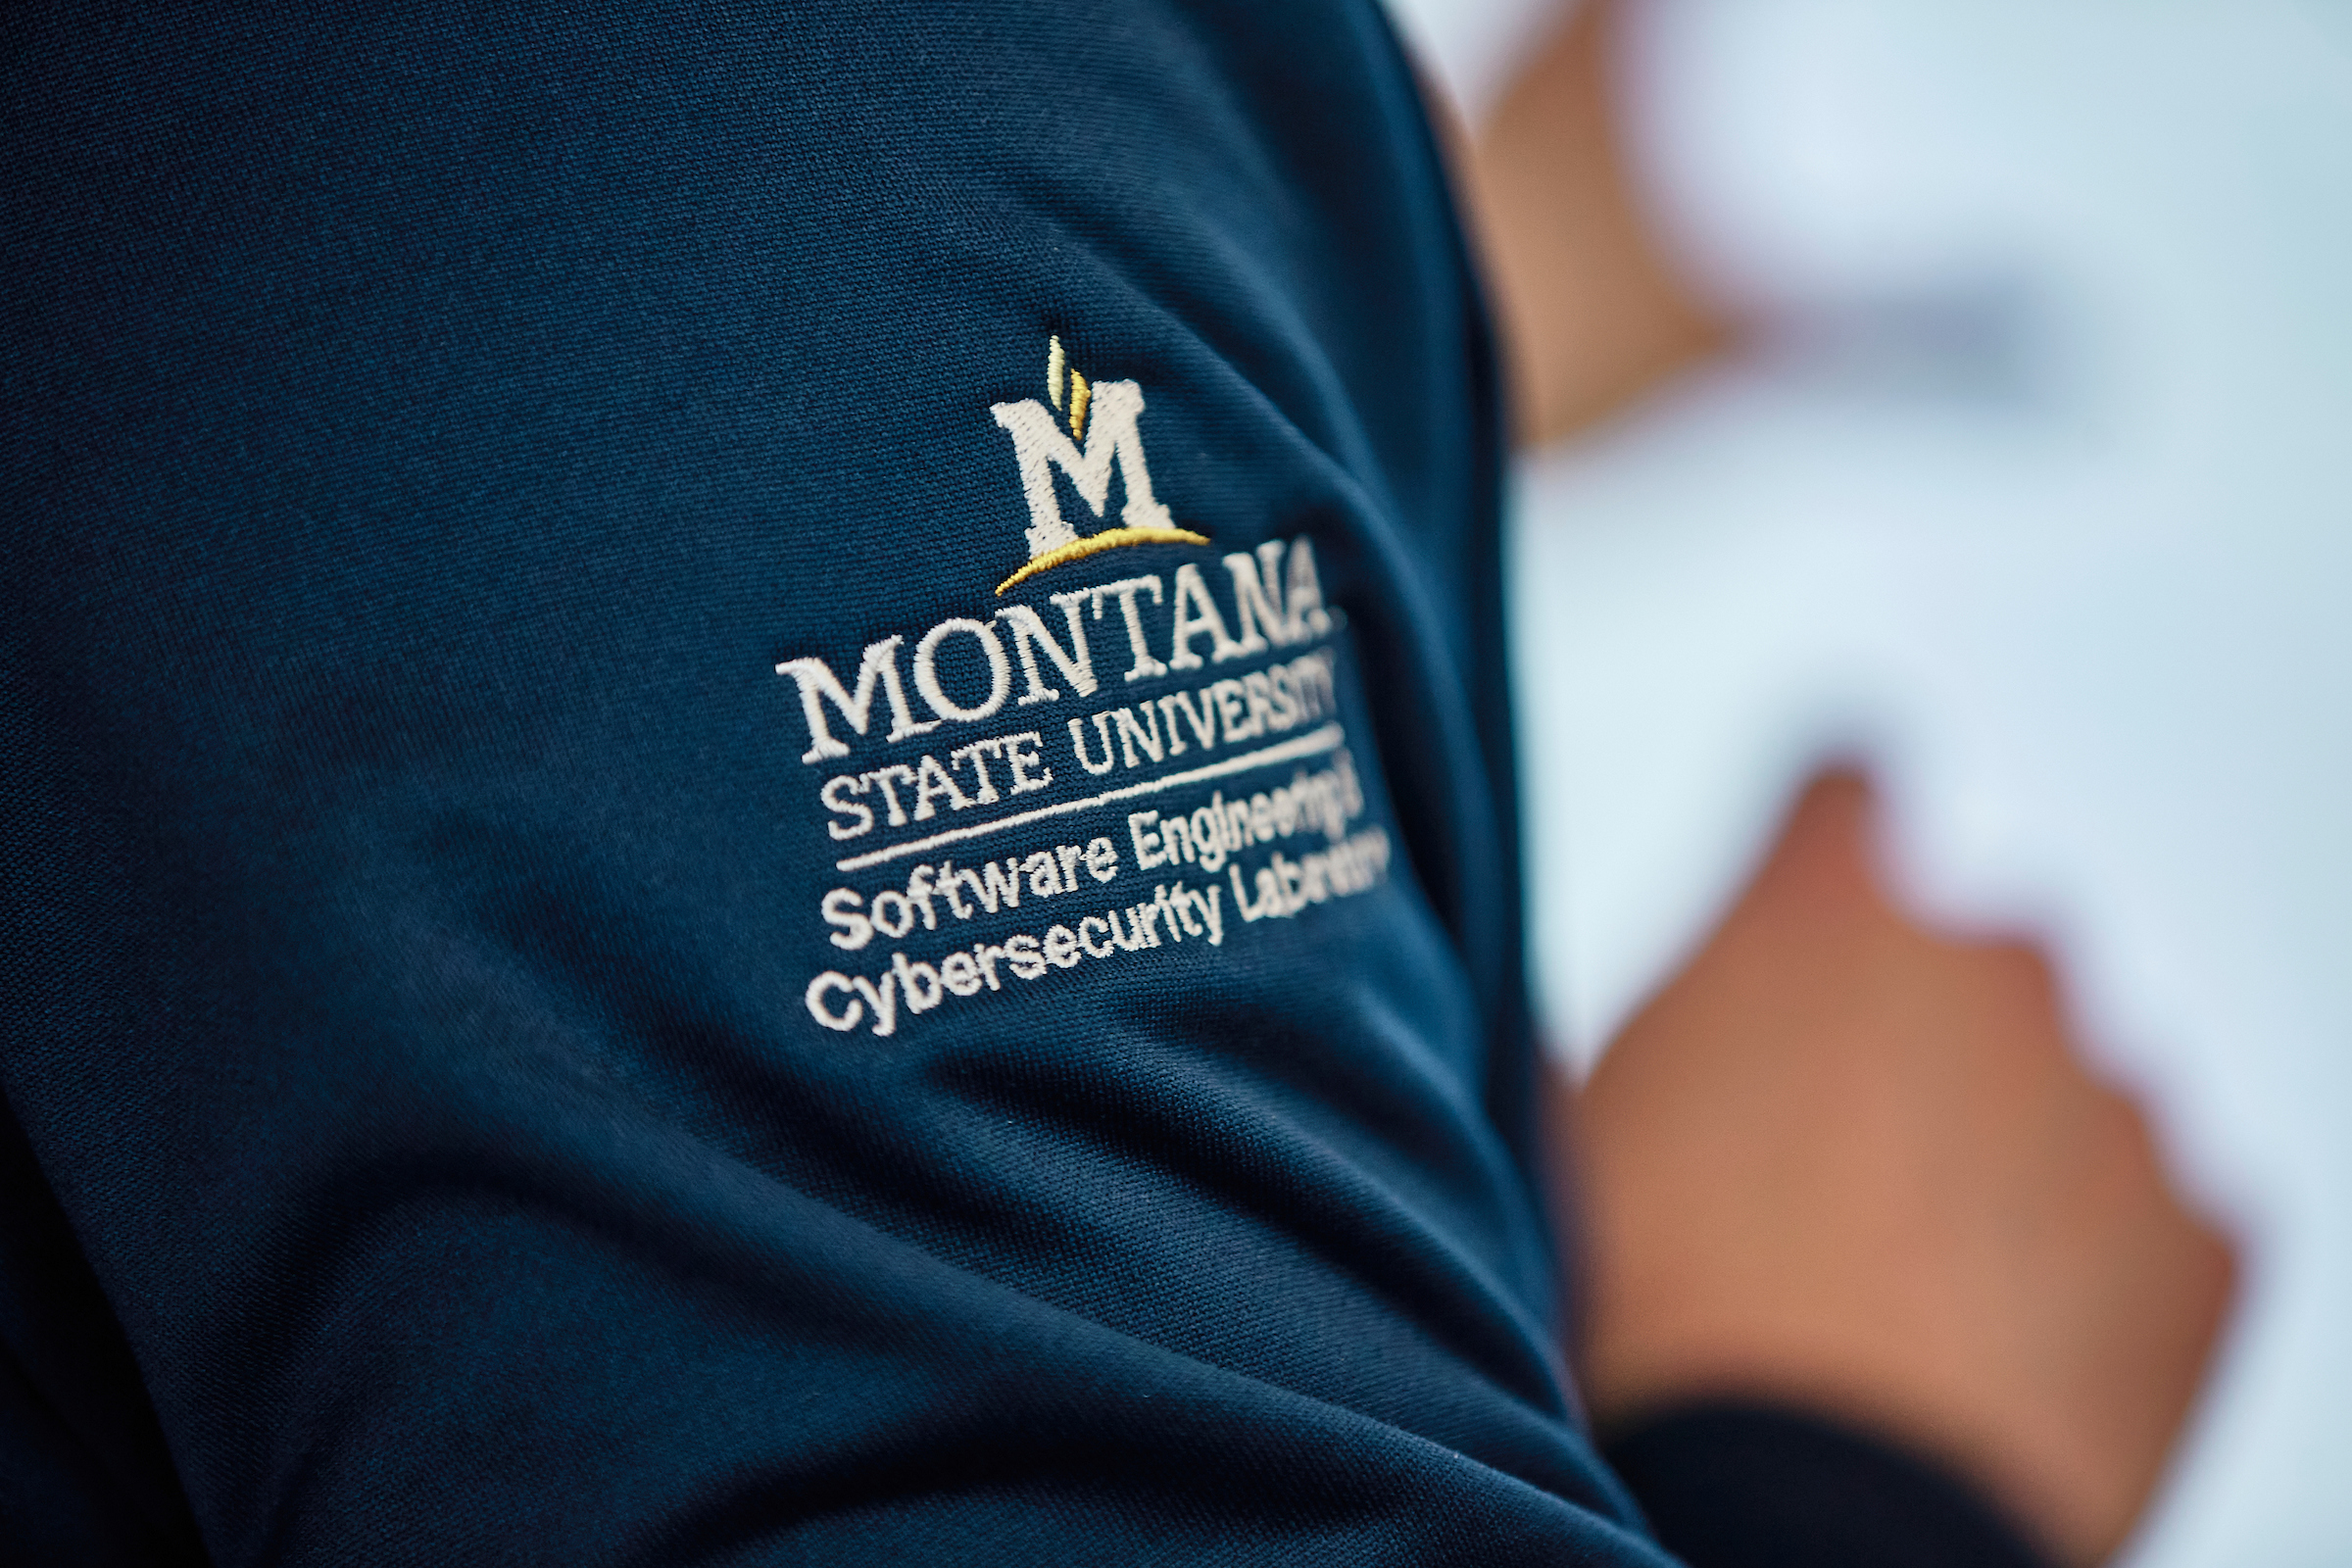 blue jacket sleeve with MSU logo